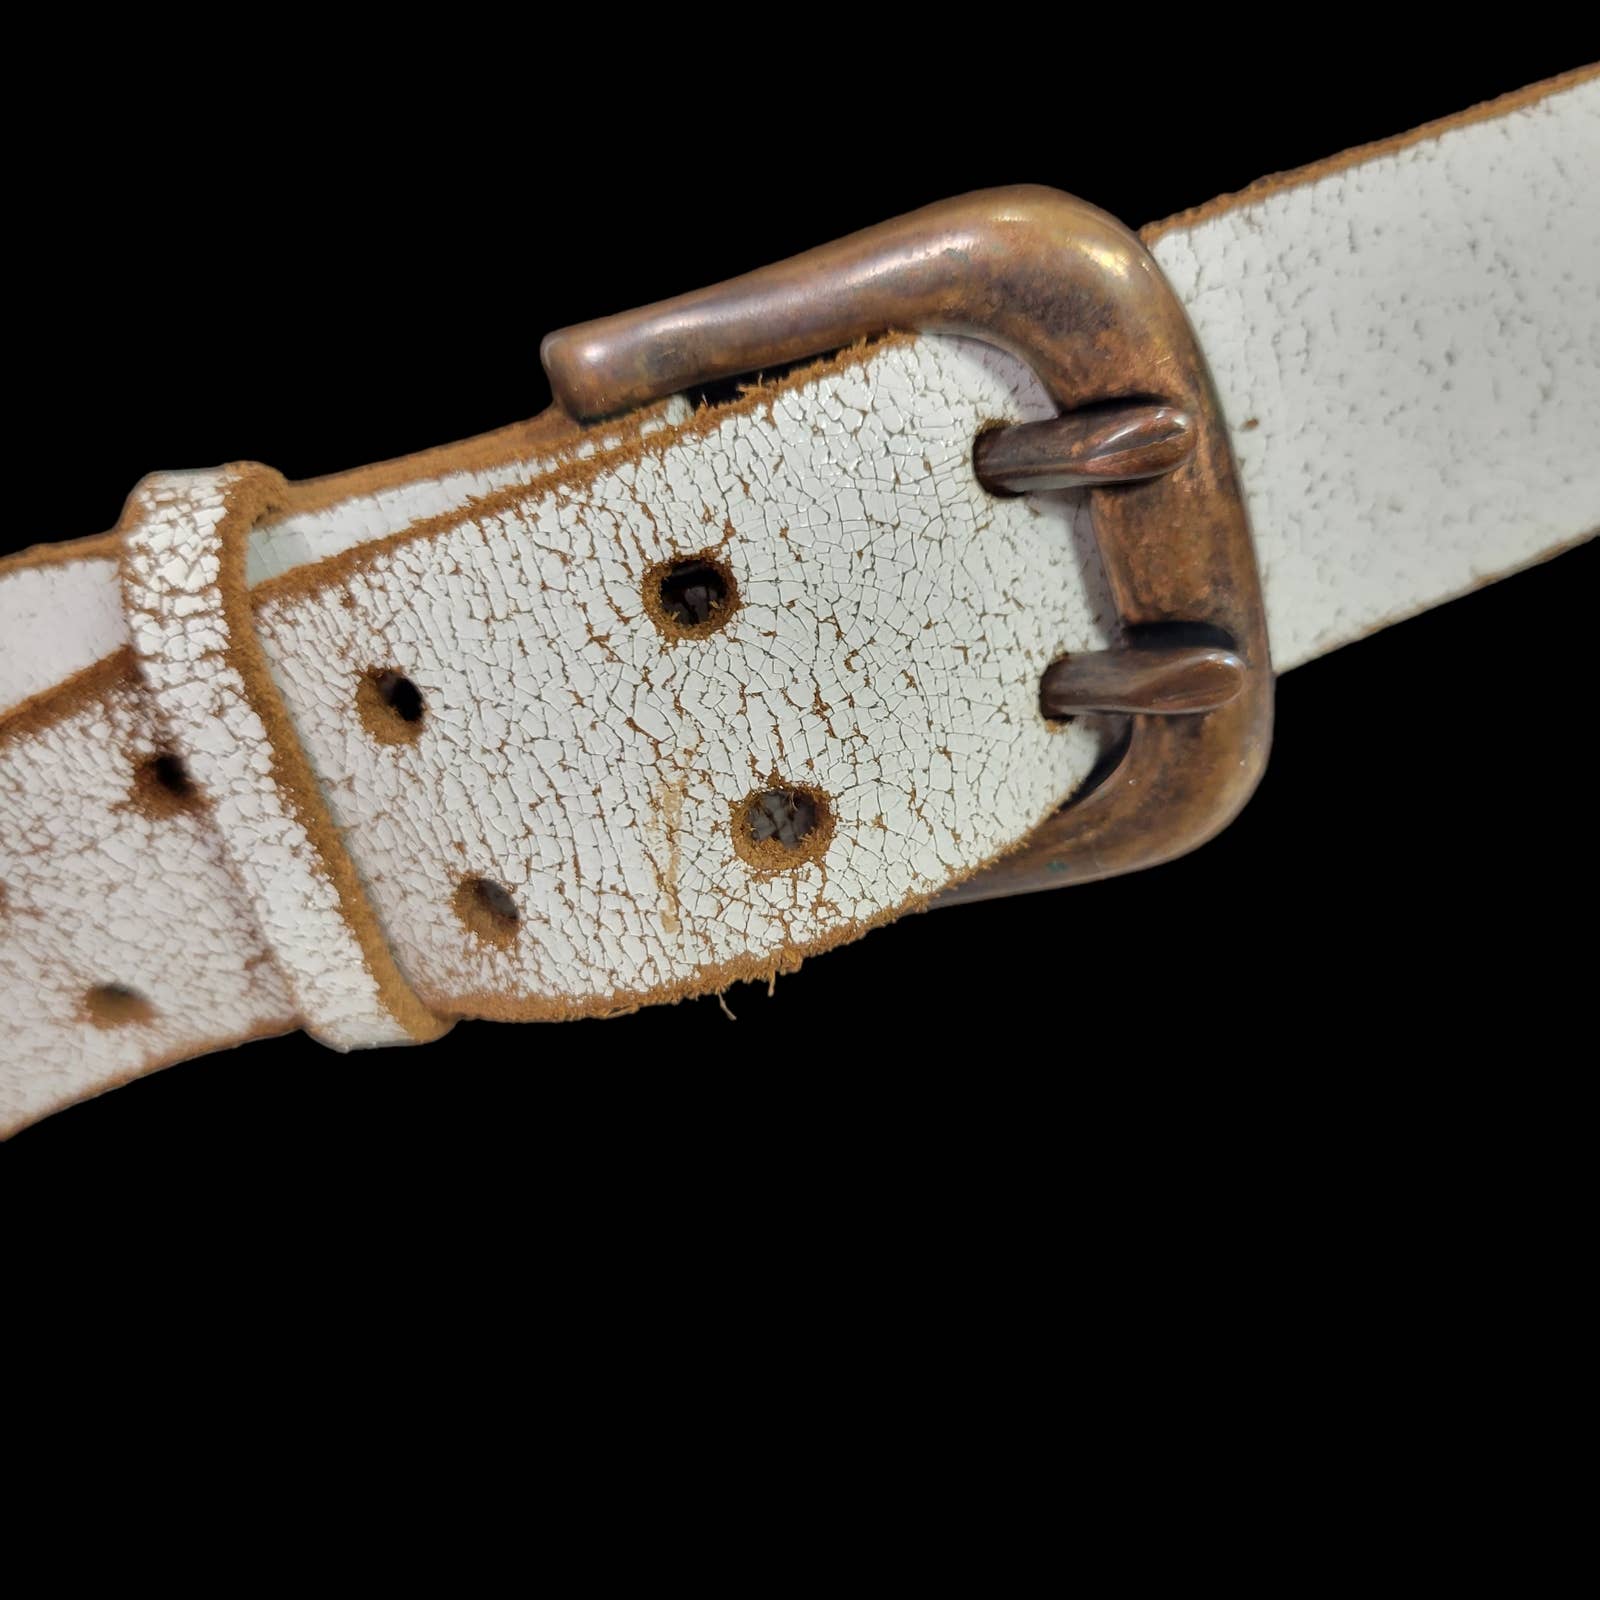 Les Temps Des Cerises White Belt Crackled Leather Studded Branded Double Prong Size Medium